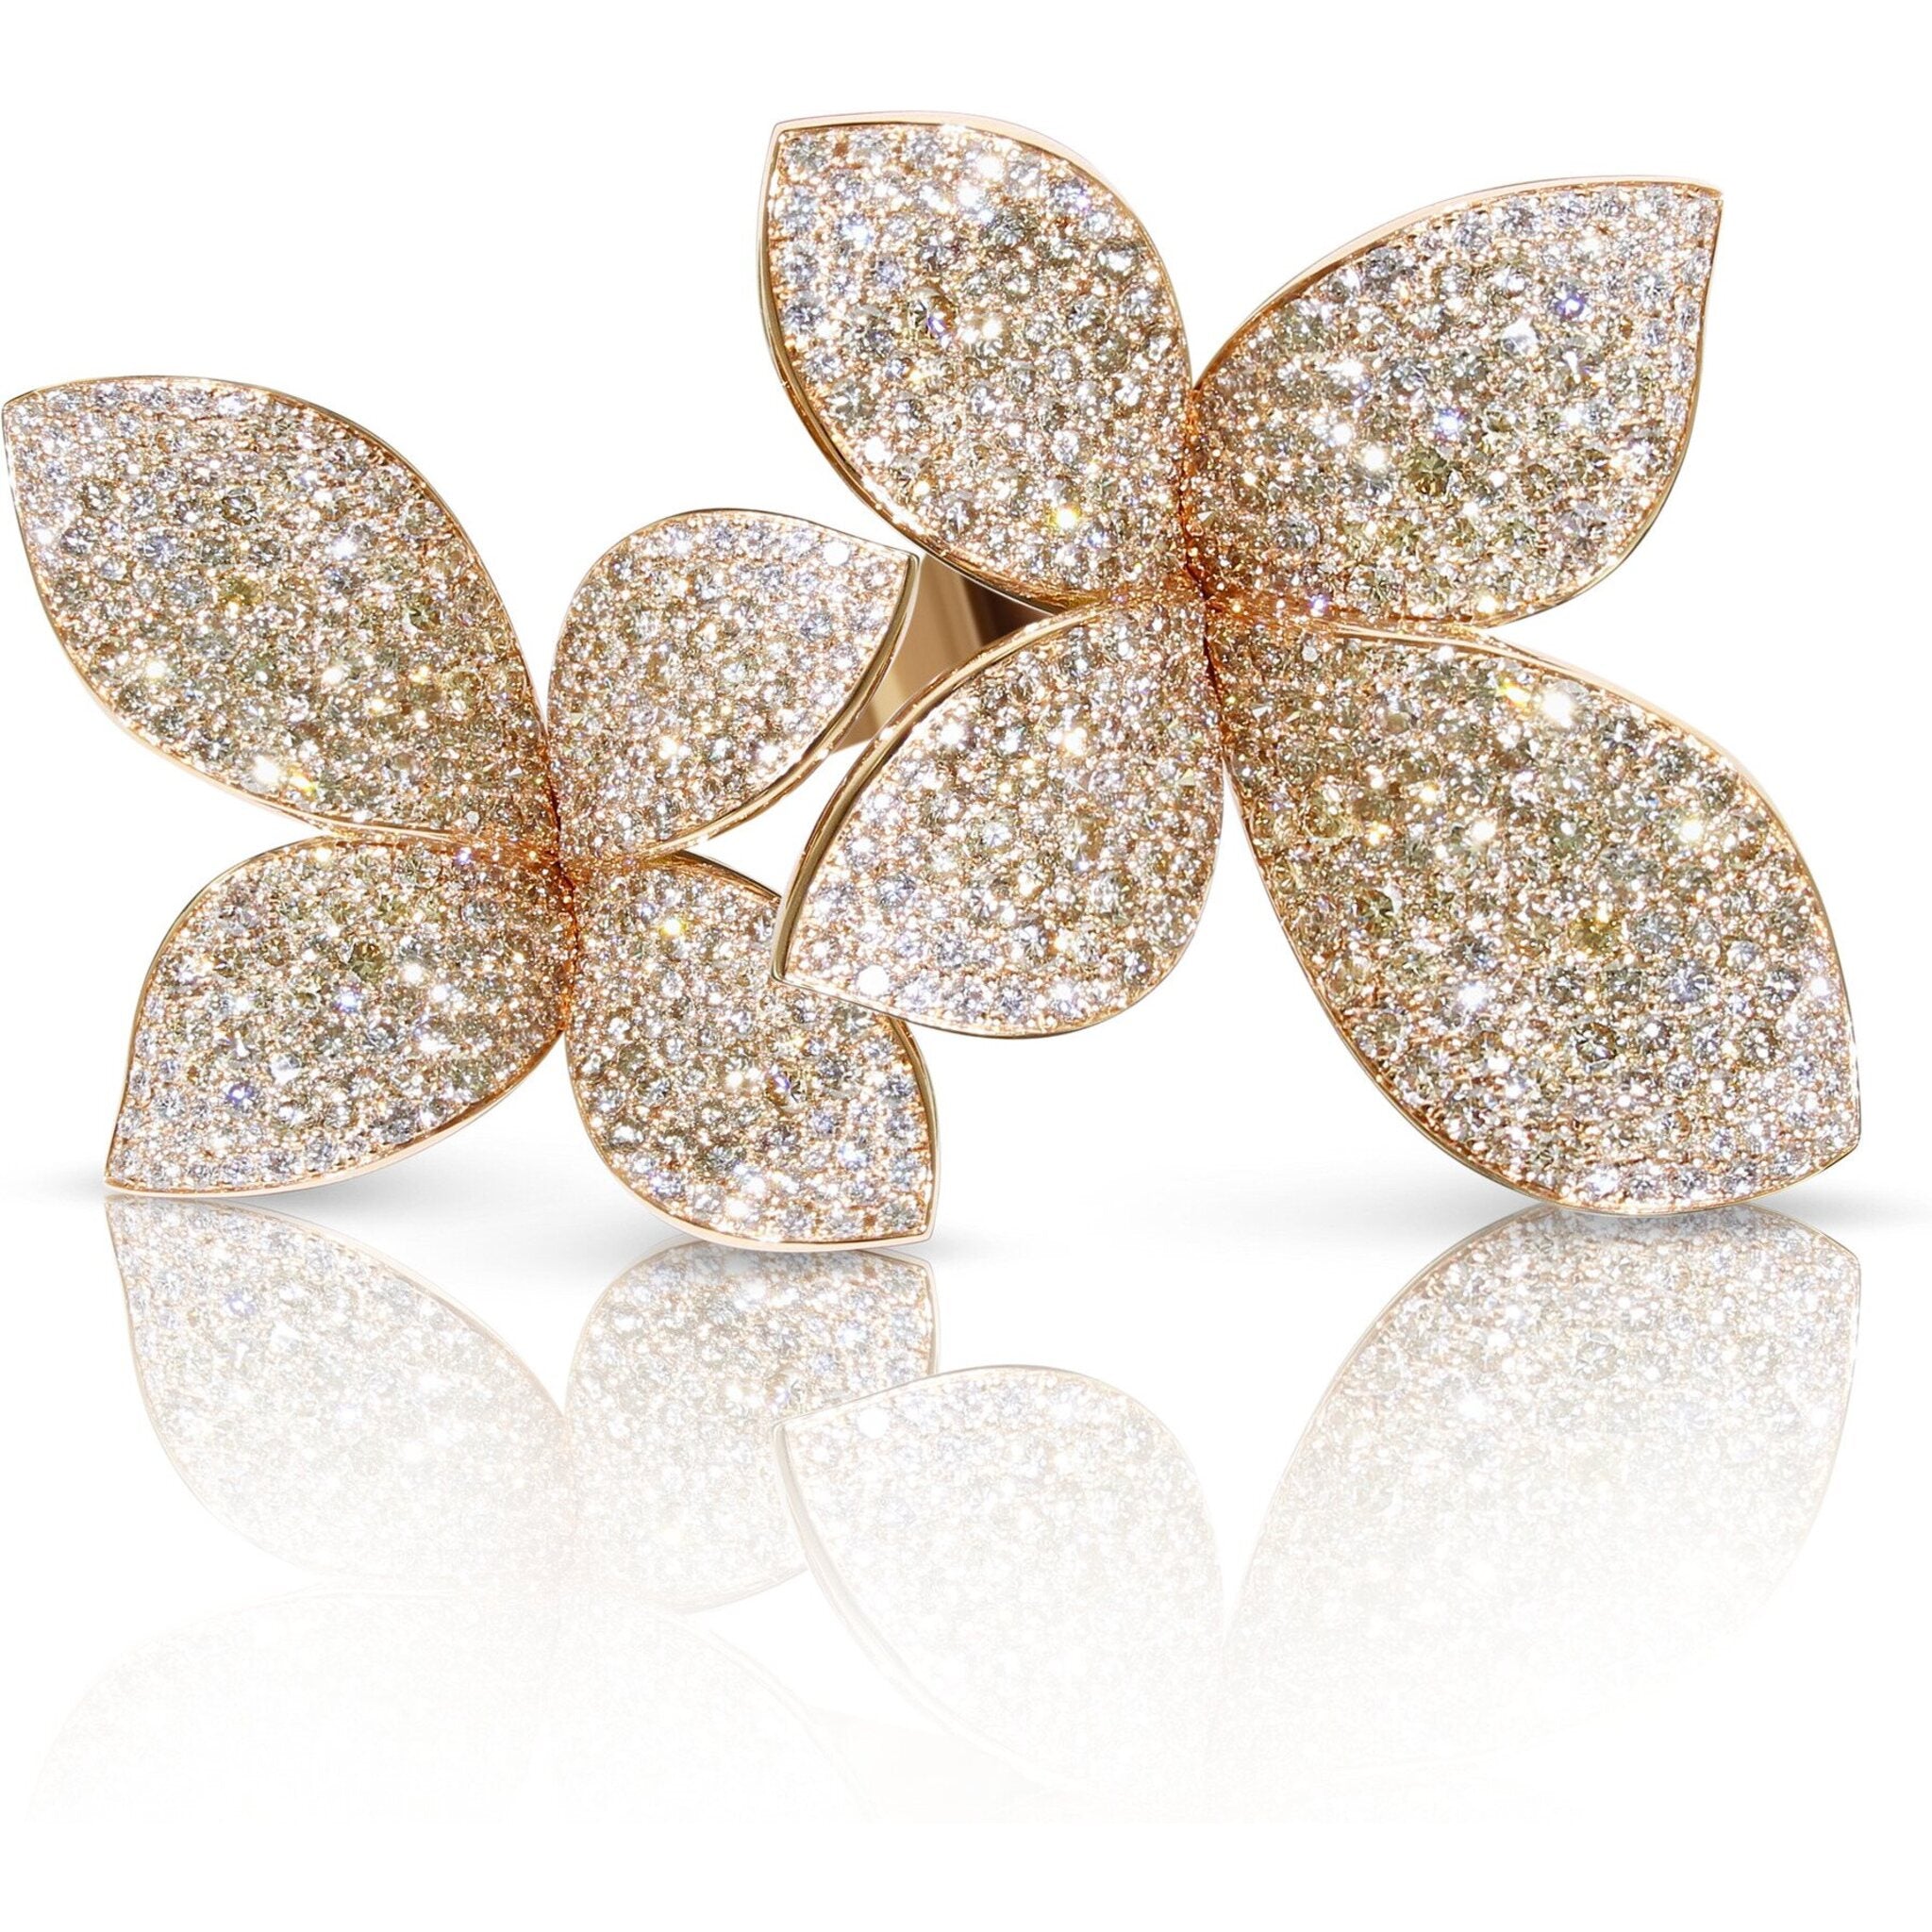 Pasquale Bruni  - Giardini Segreti Double Flower Ring in 18k Rose Gold with White and Champagne Diamonds